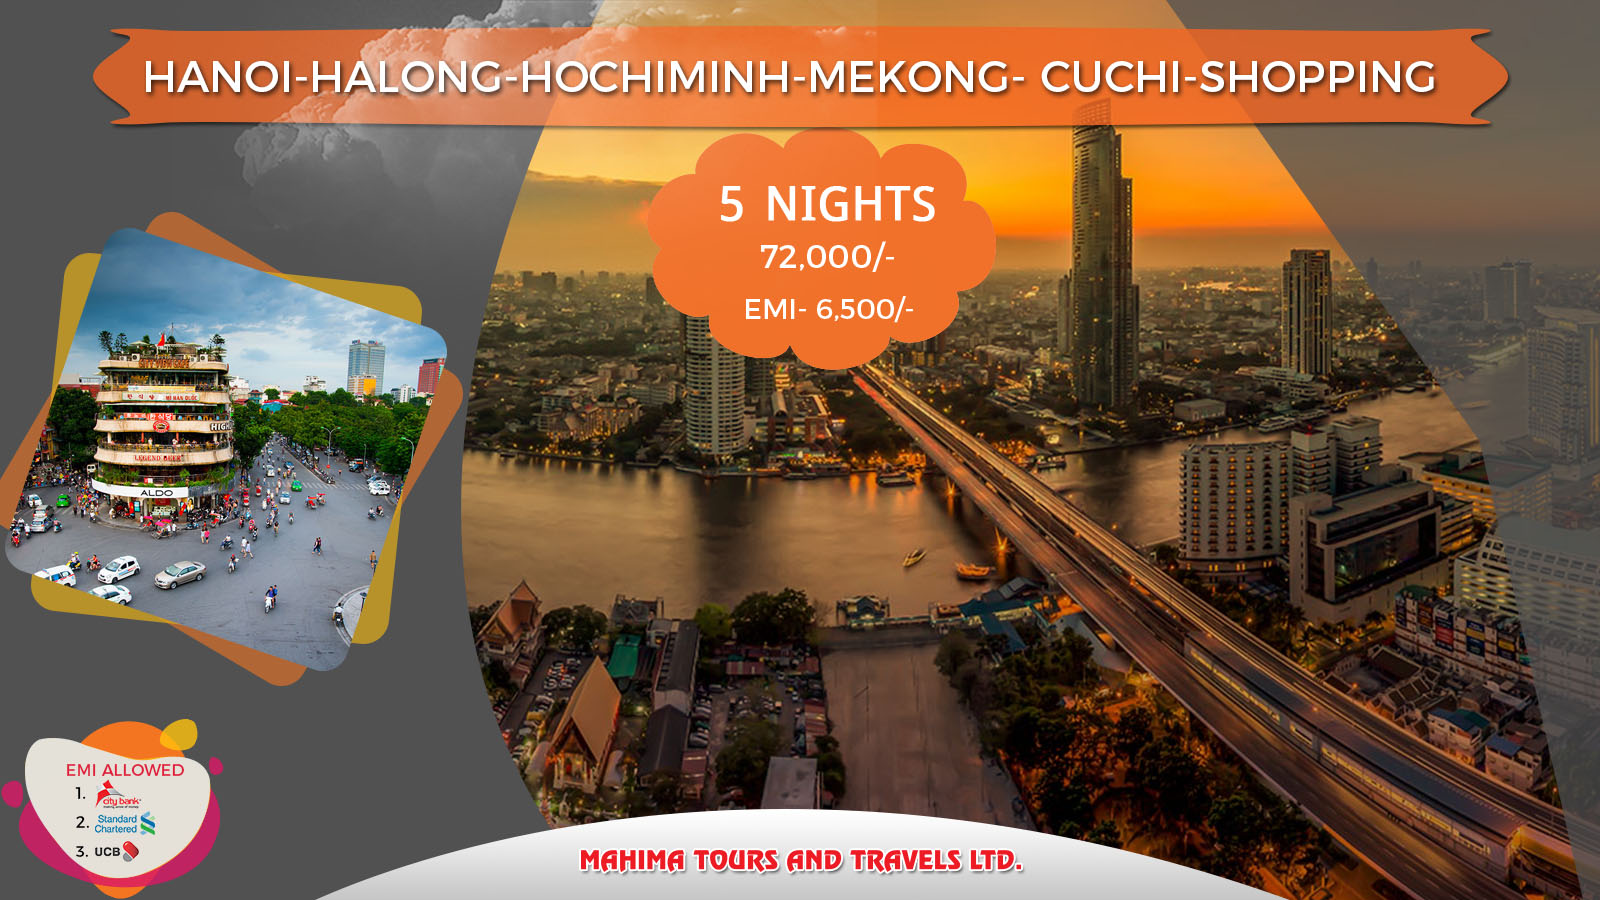 HANOI-HALONG-HOCHIMINH-MEKONG-CUCHI (VIETNAM)